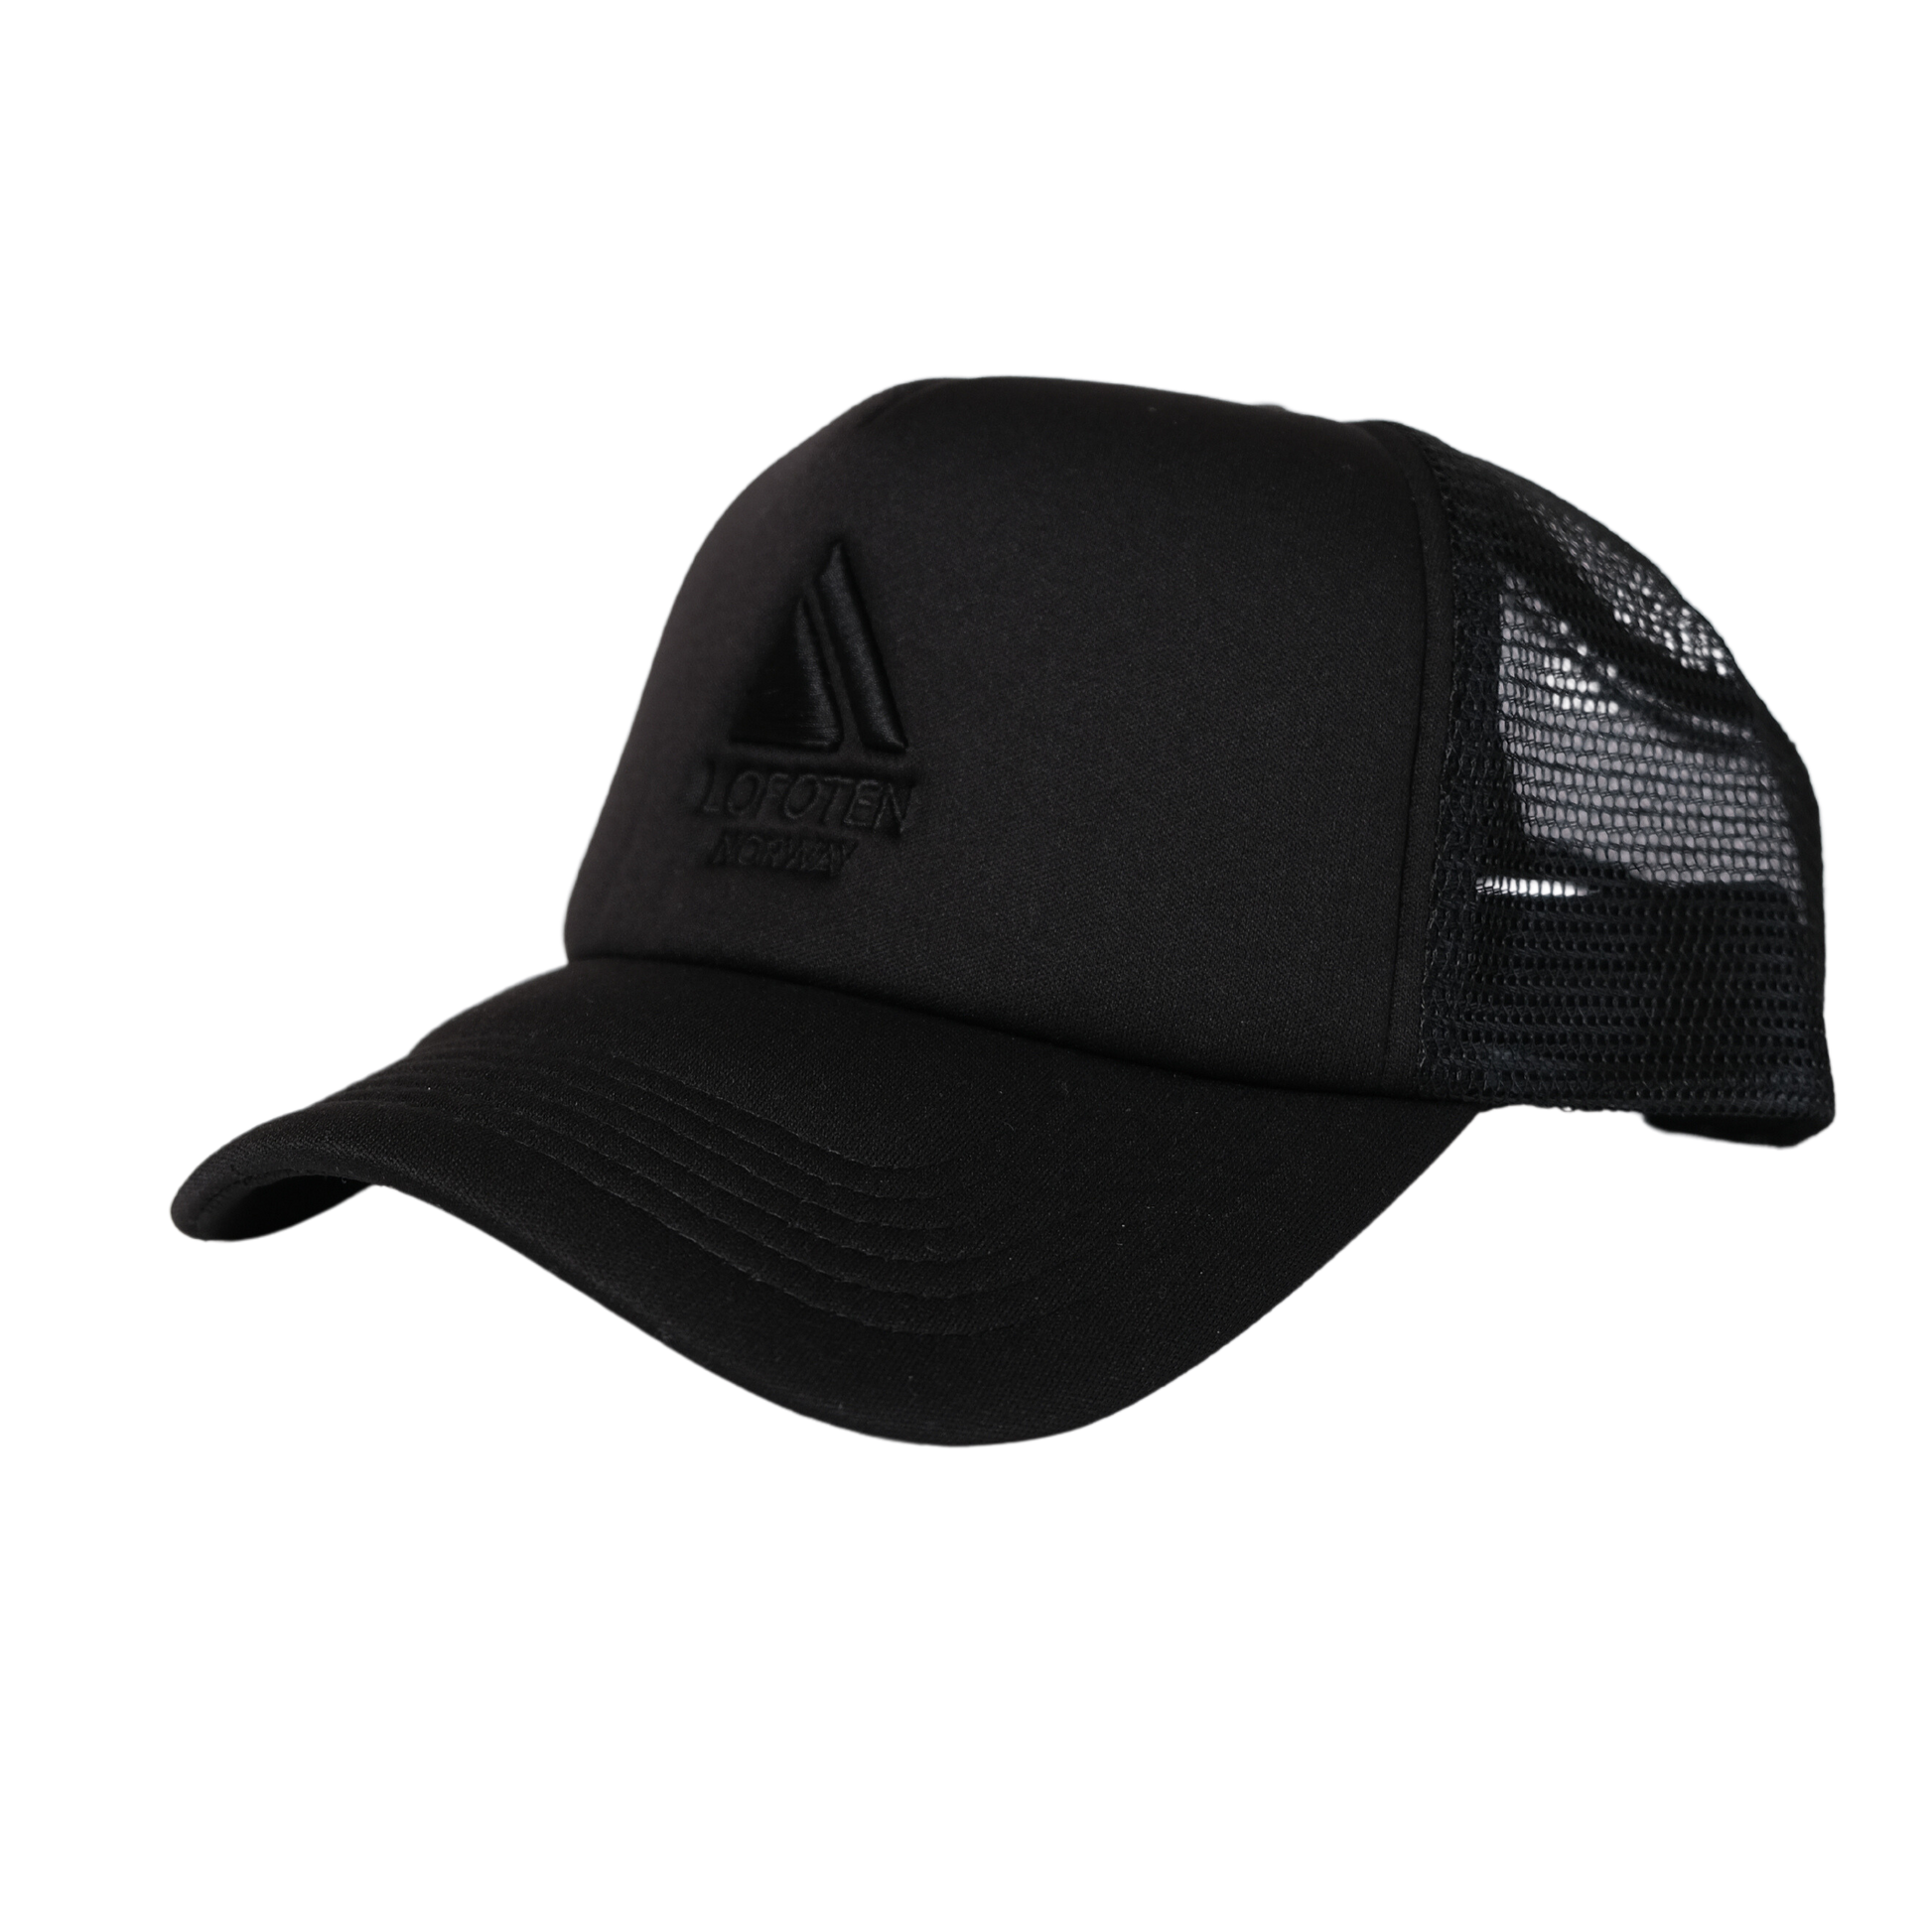 Lofoten cap, black mesh